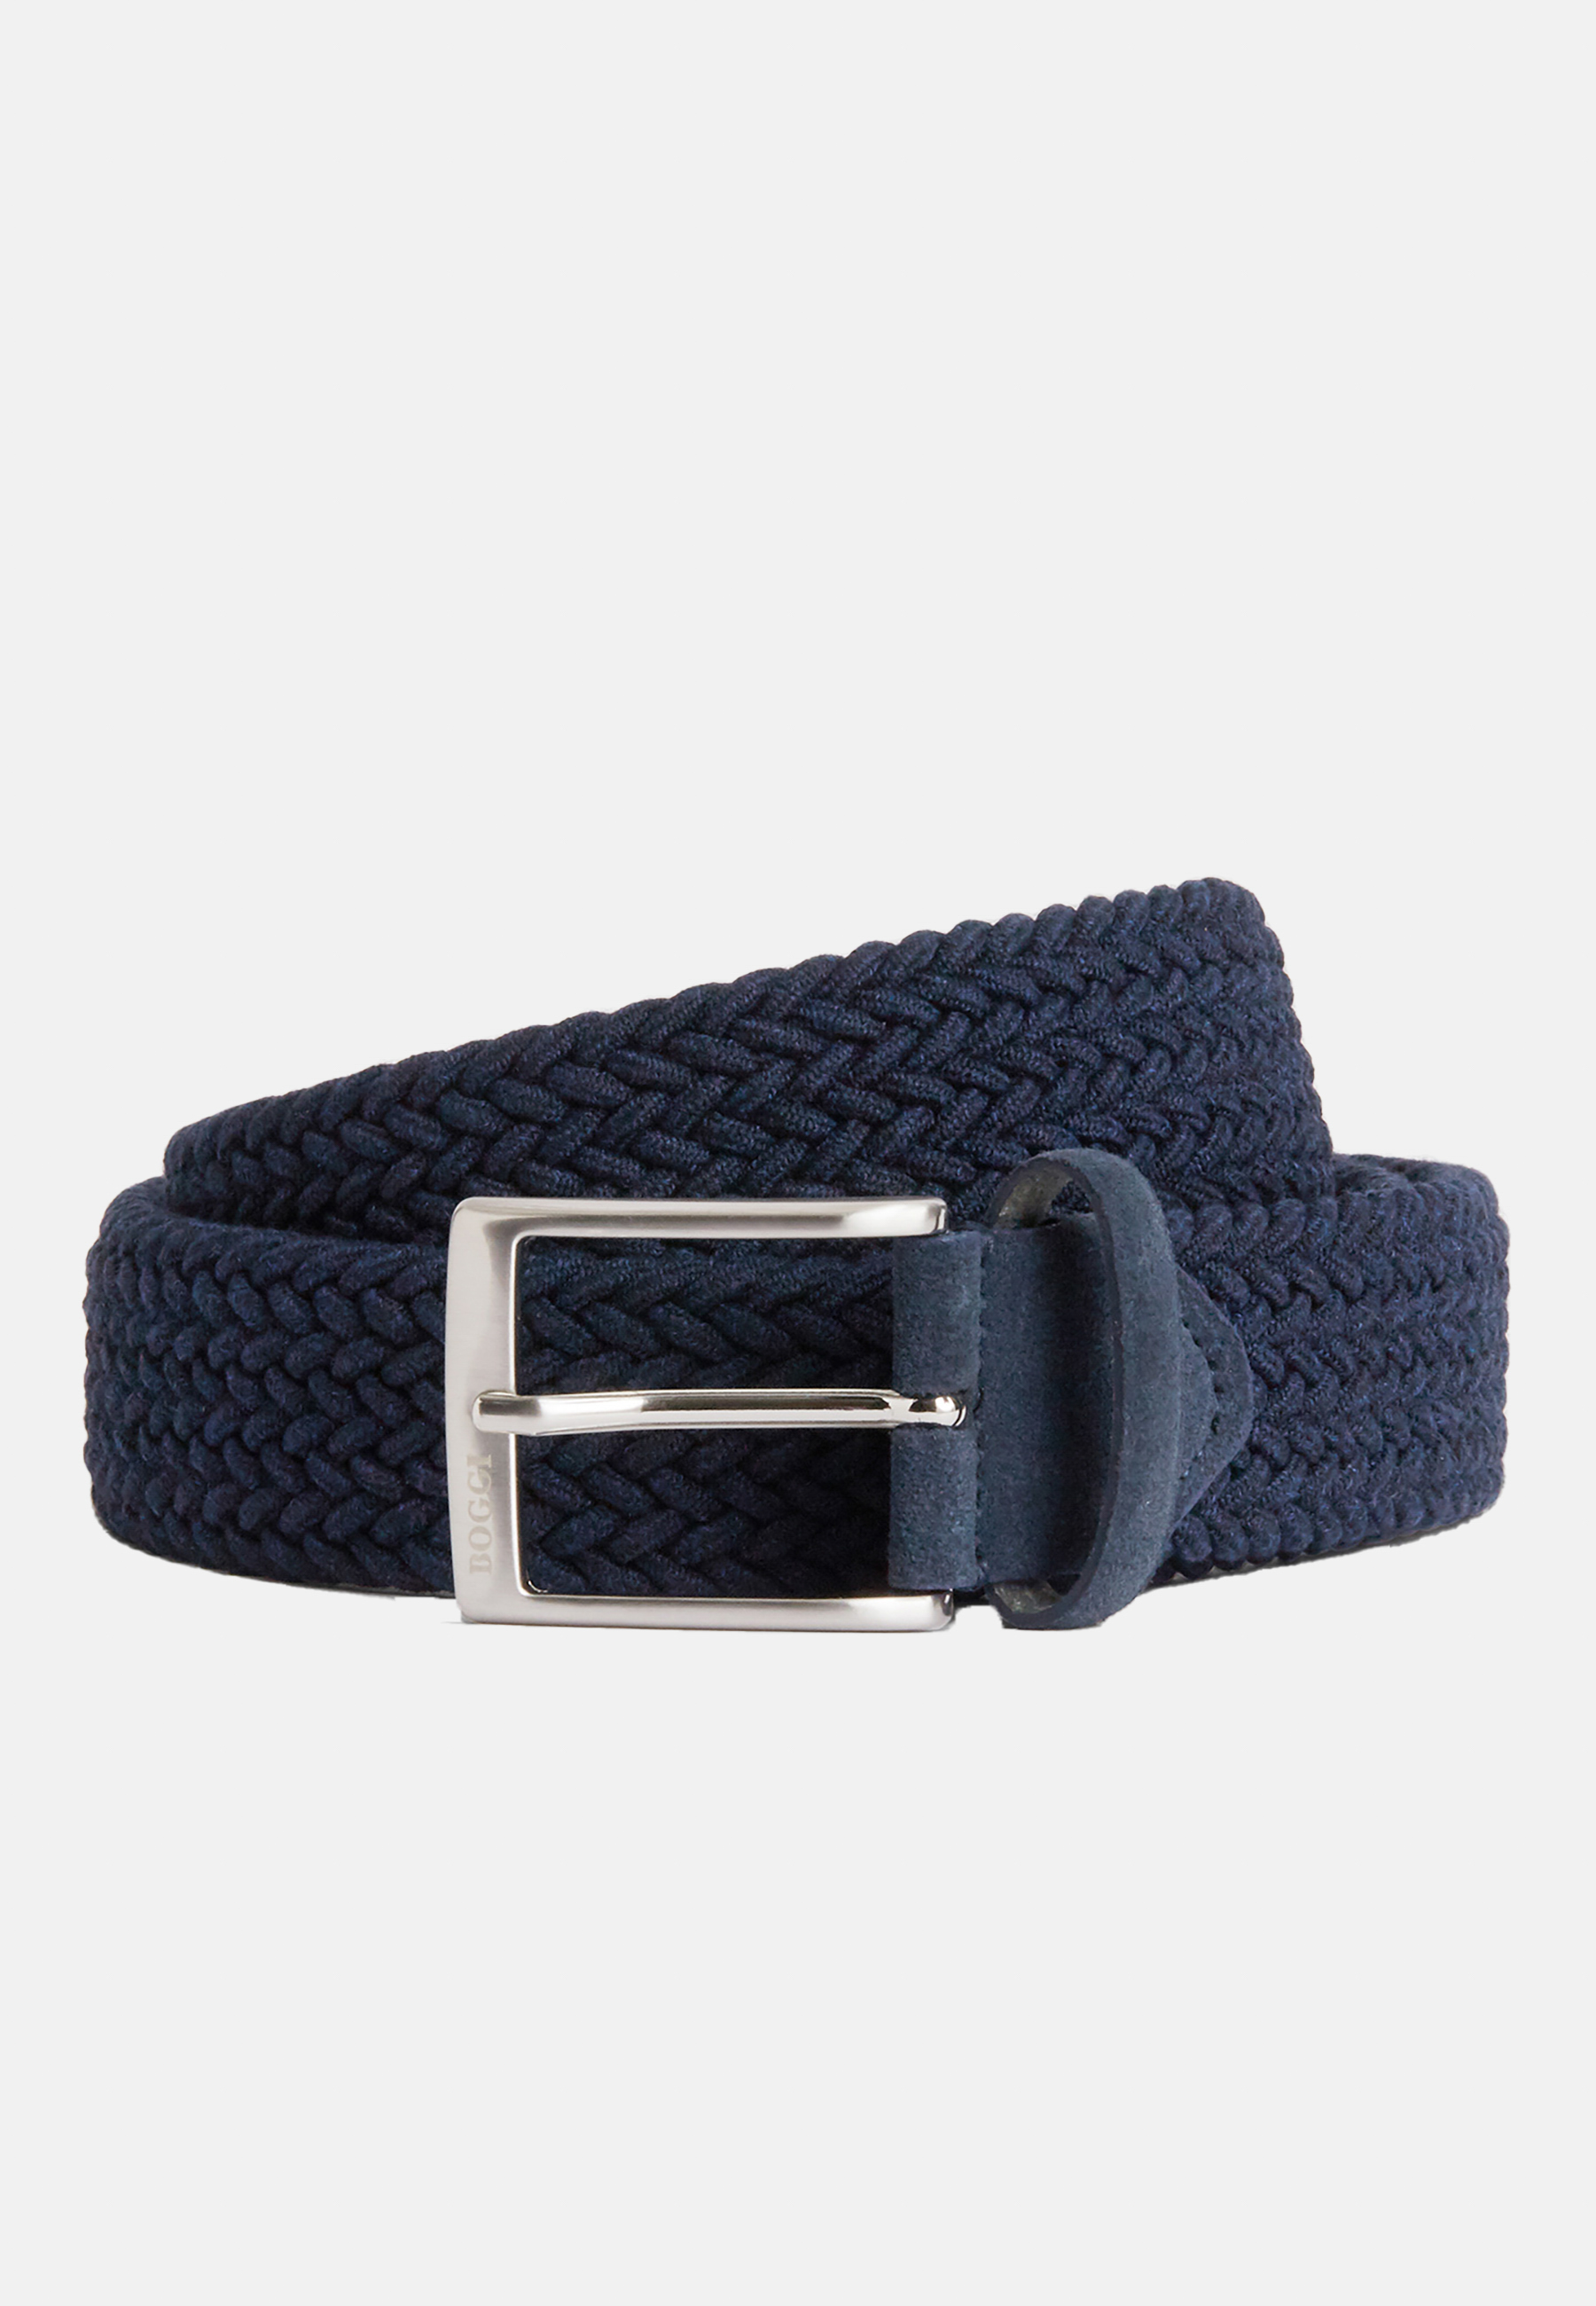 Visland Nylon Belt Adjustable Exquisite Plastic Buckle Men Lightweight Waist Belt for Daily Wear, Men's, Size: One size, Blue